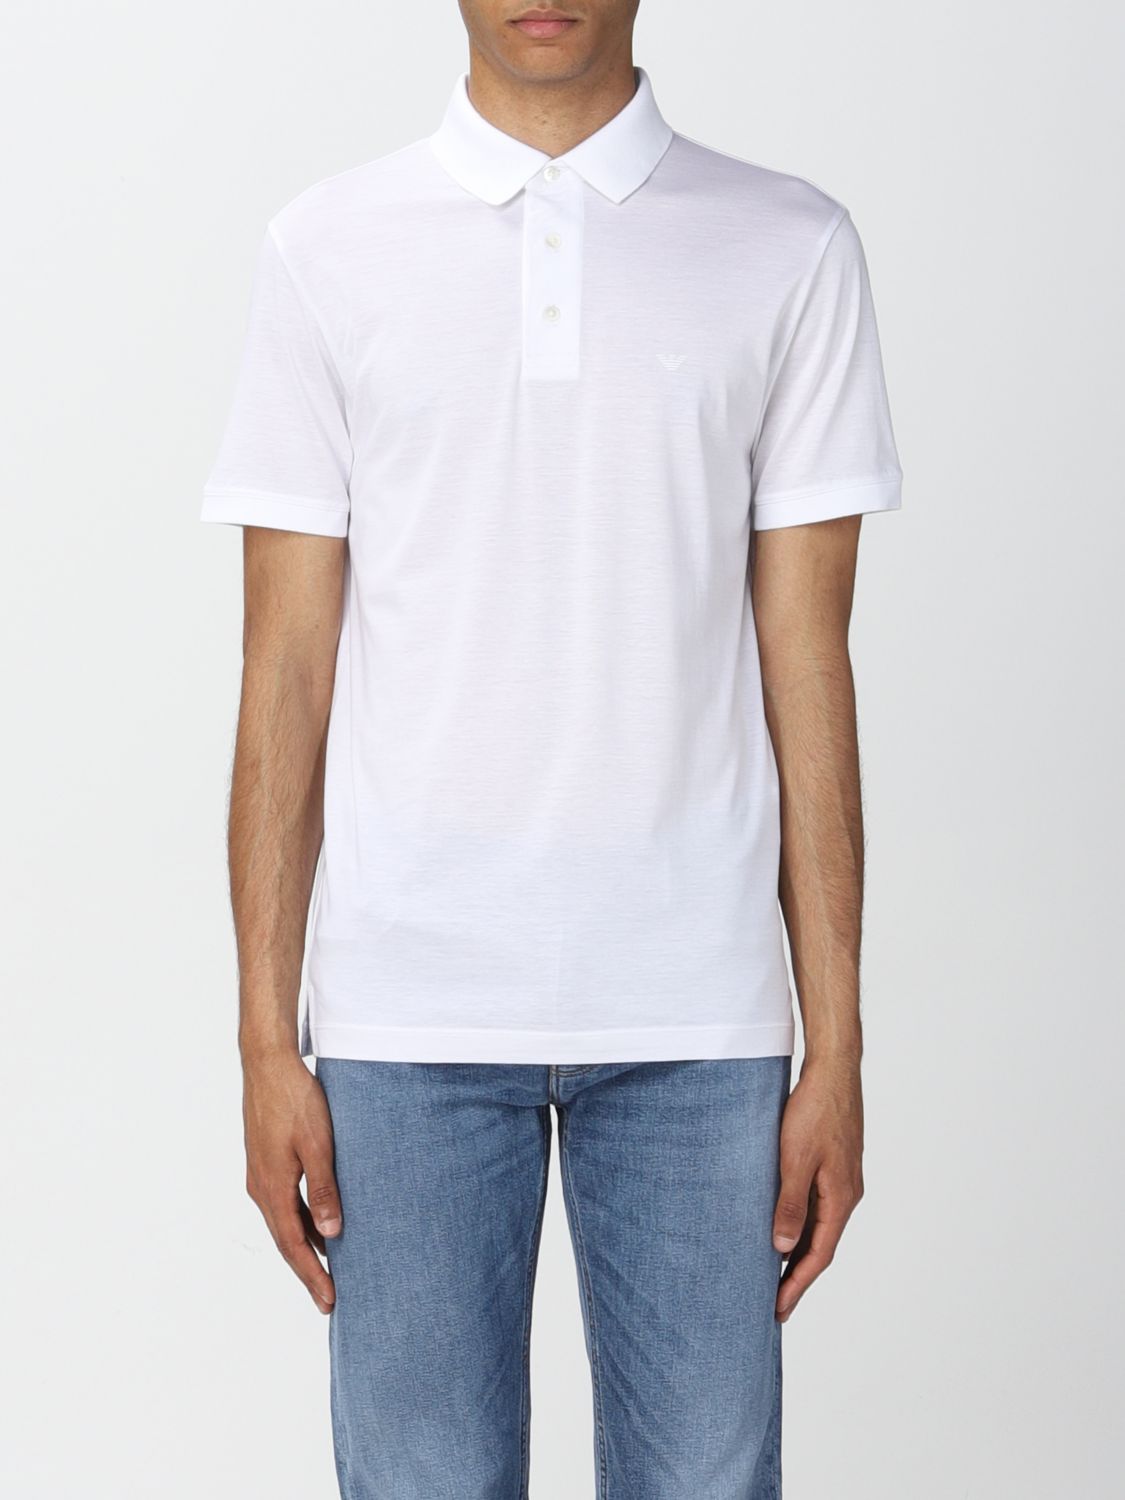 EMPORIO ARMANI: Polo shirt men - White | Polo Shirt Emporio Armani ...